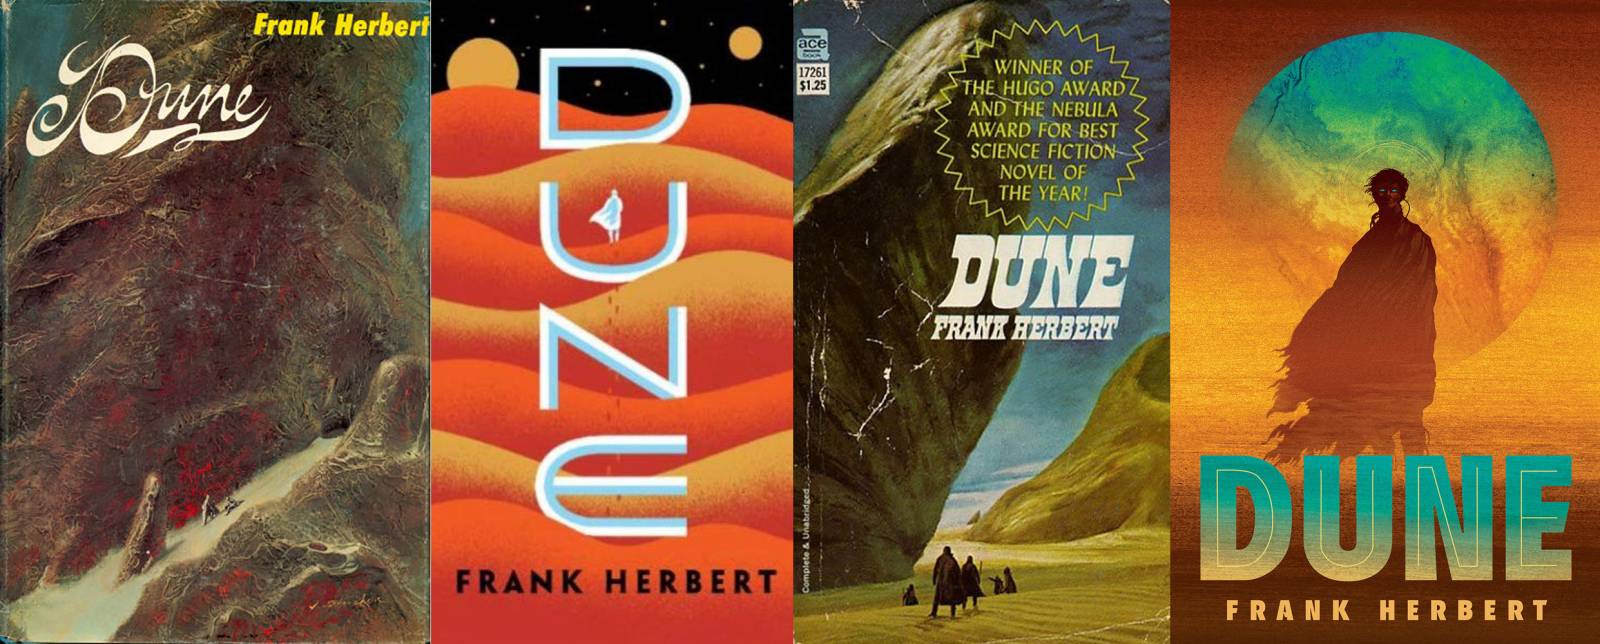 Book Cover Trends Thru Time Via Dune Muddy Colors